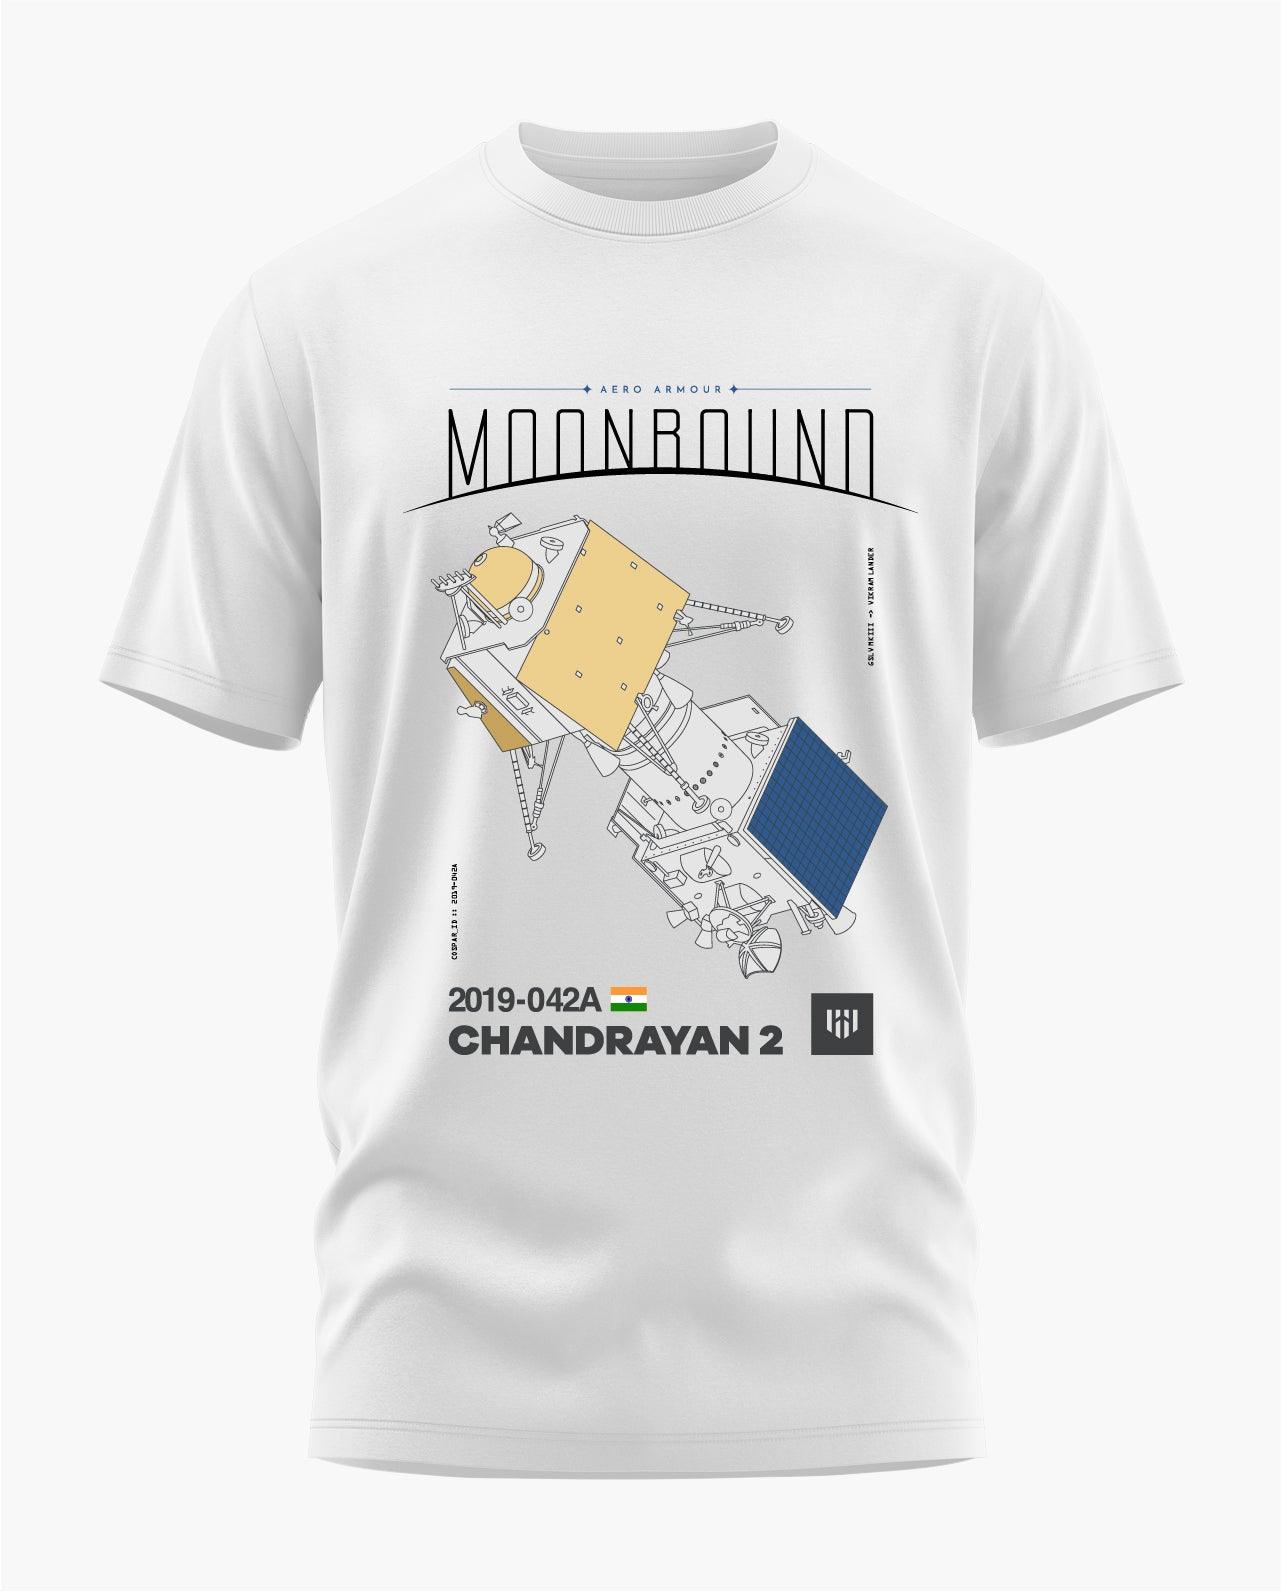 MoonBound Chandrayan 2 T-Shirt - Aero Armour